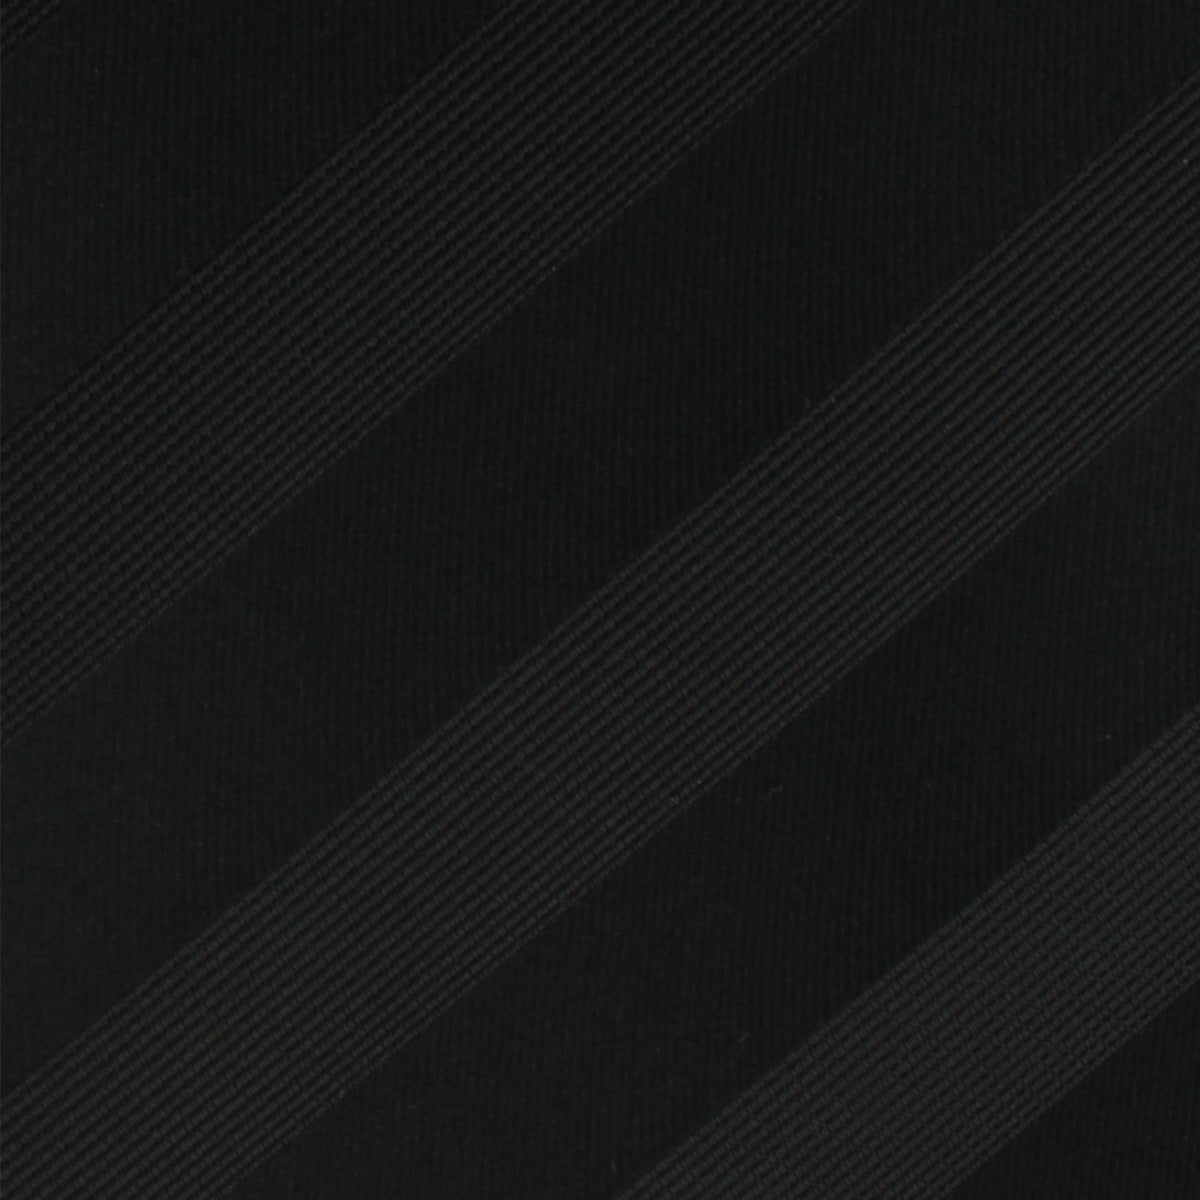 Sinatra Black Striped Pocket Square Fabric